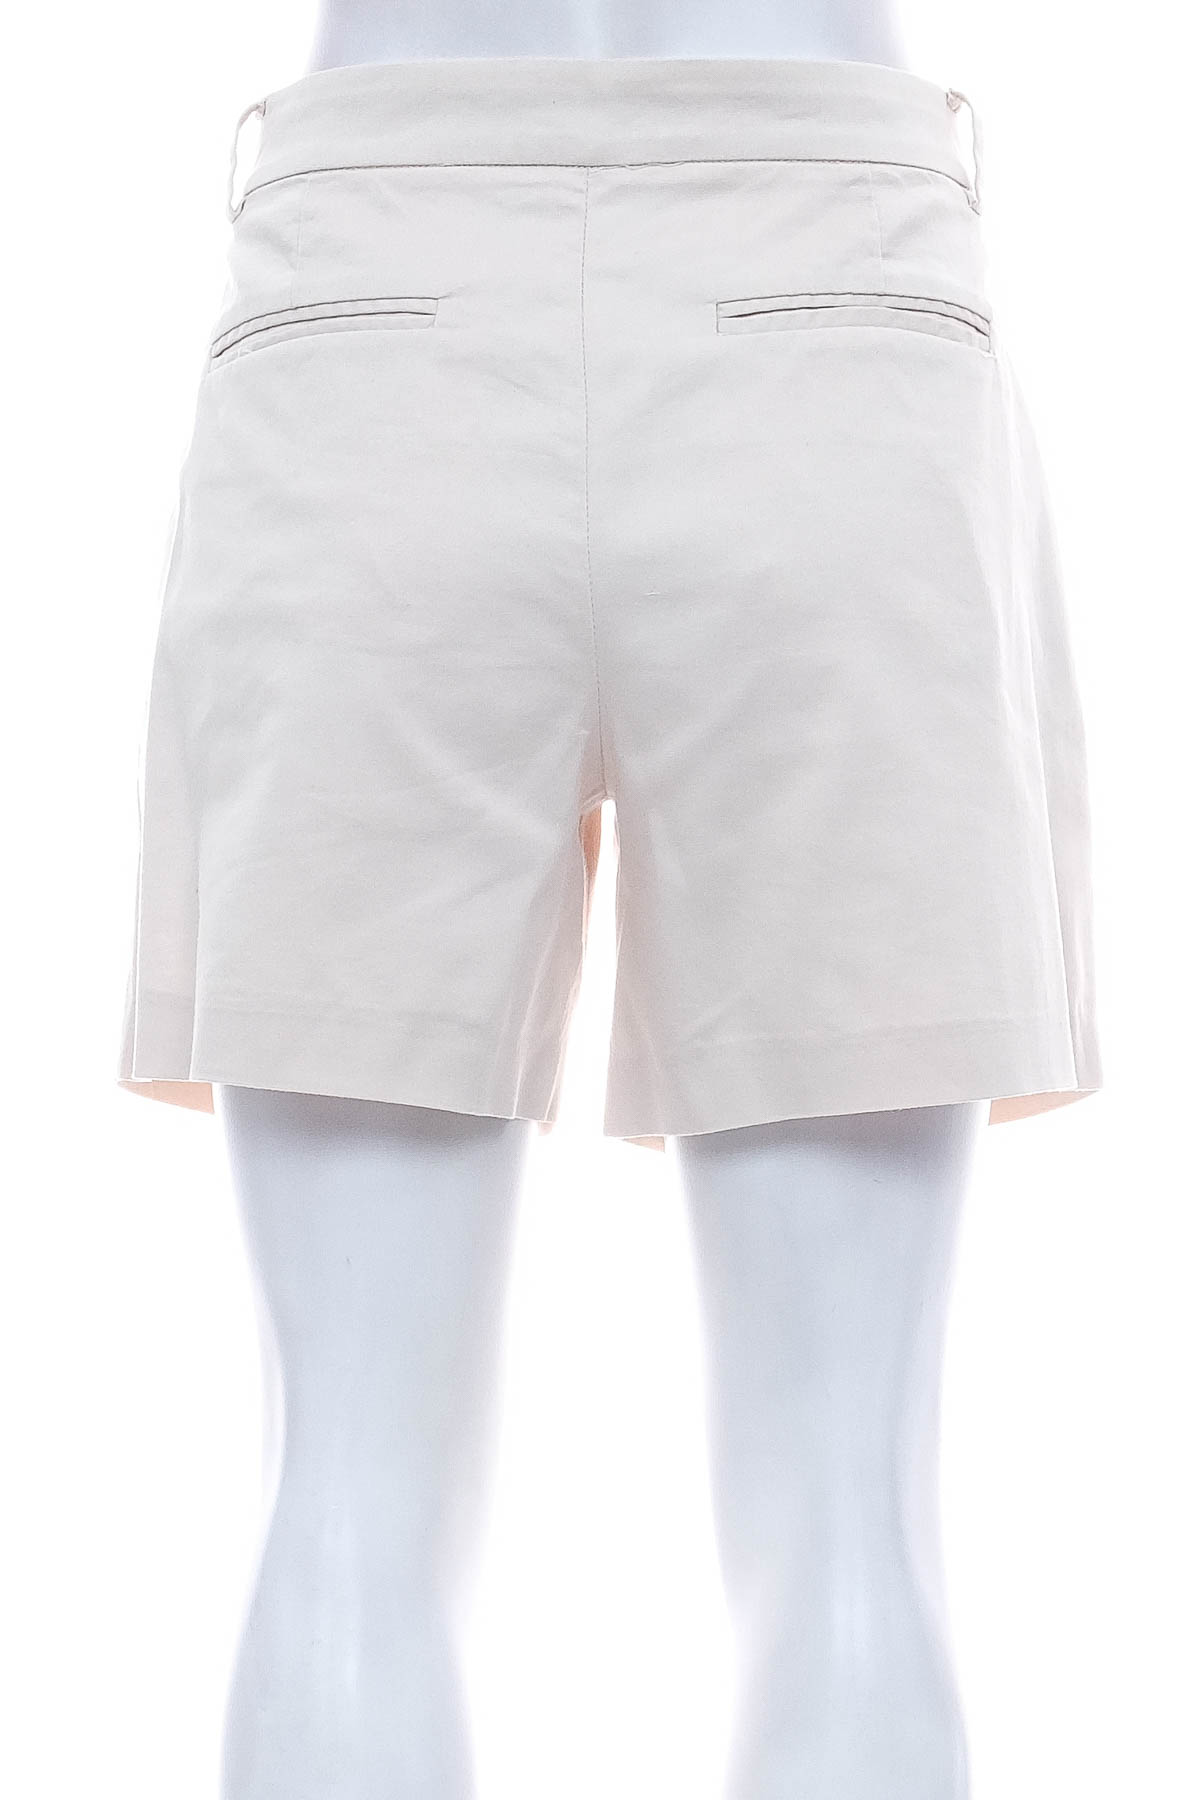 Female shorts - HALLHUBER - 1